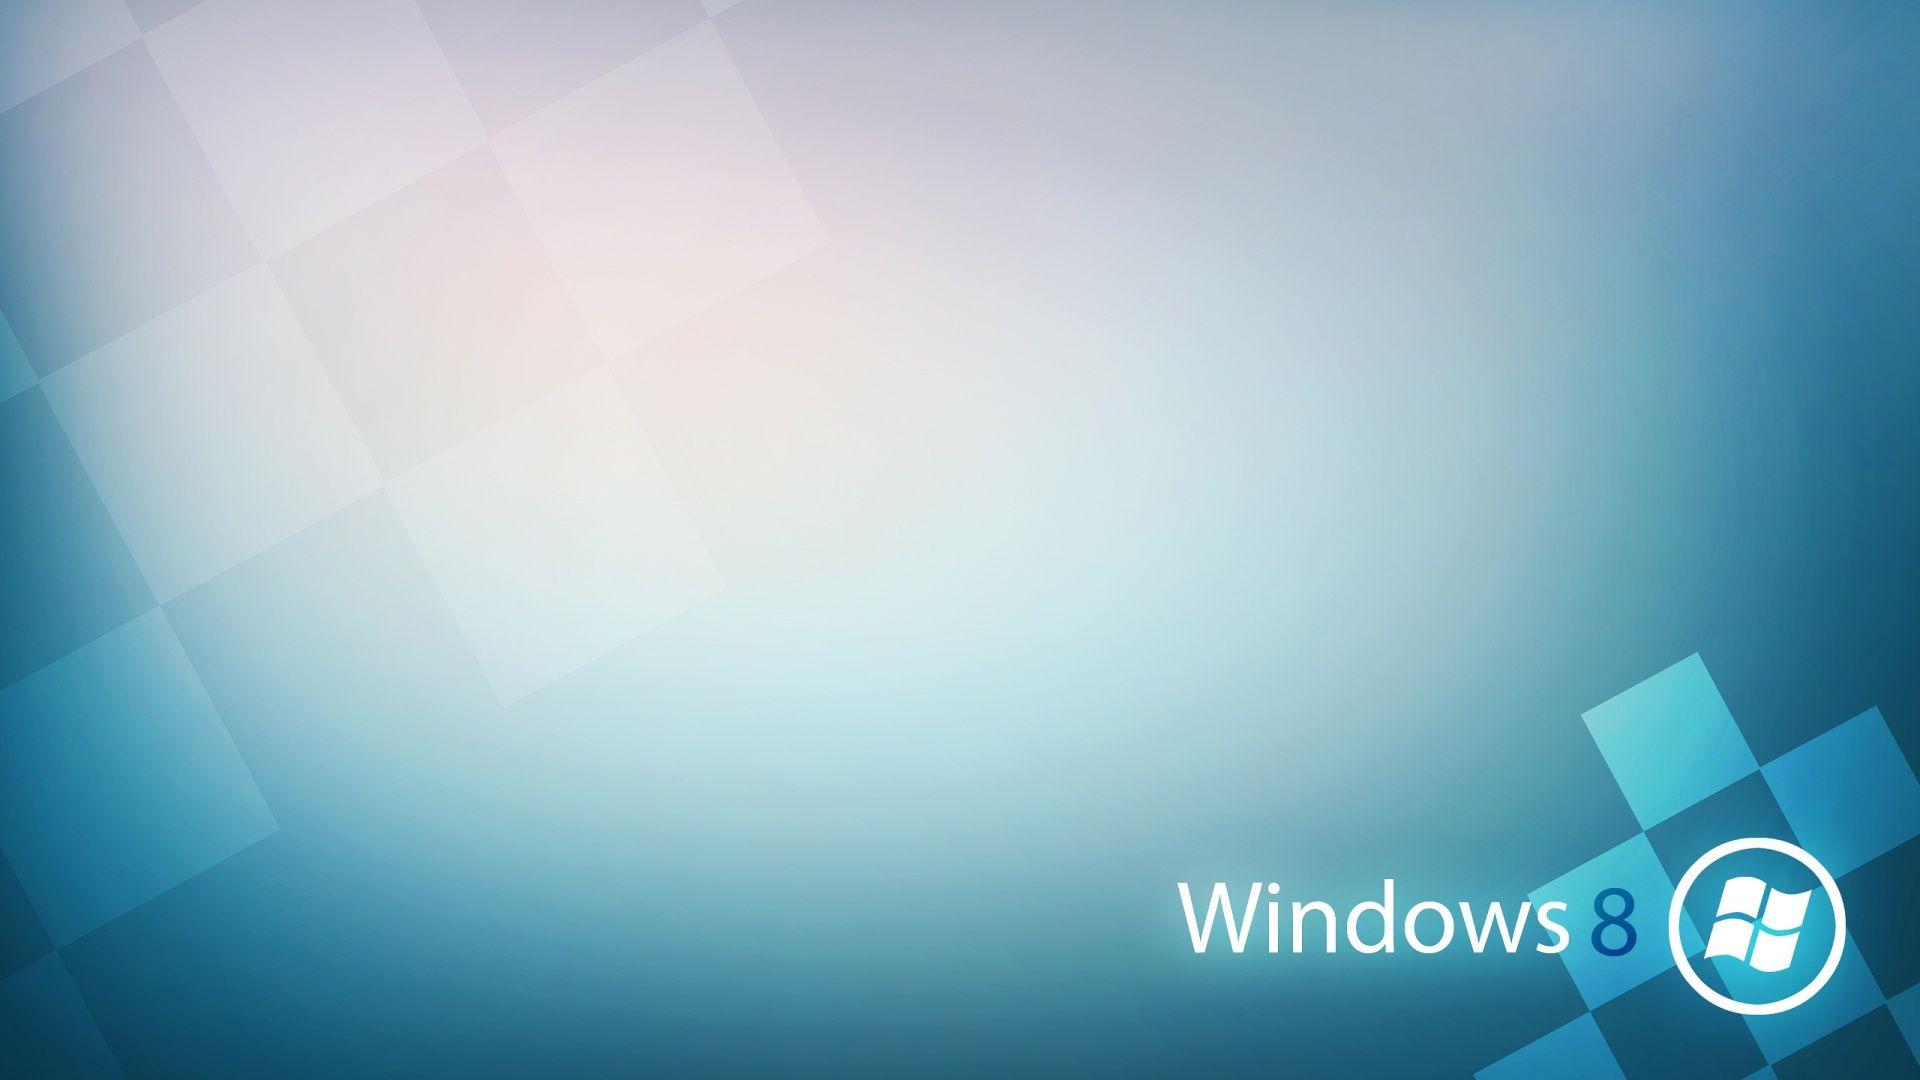 Windows 8 HD Wallpaper Background 1080p. Genovic